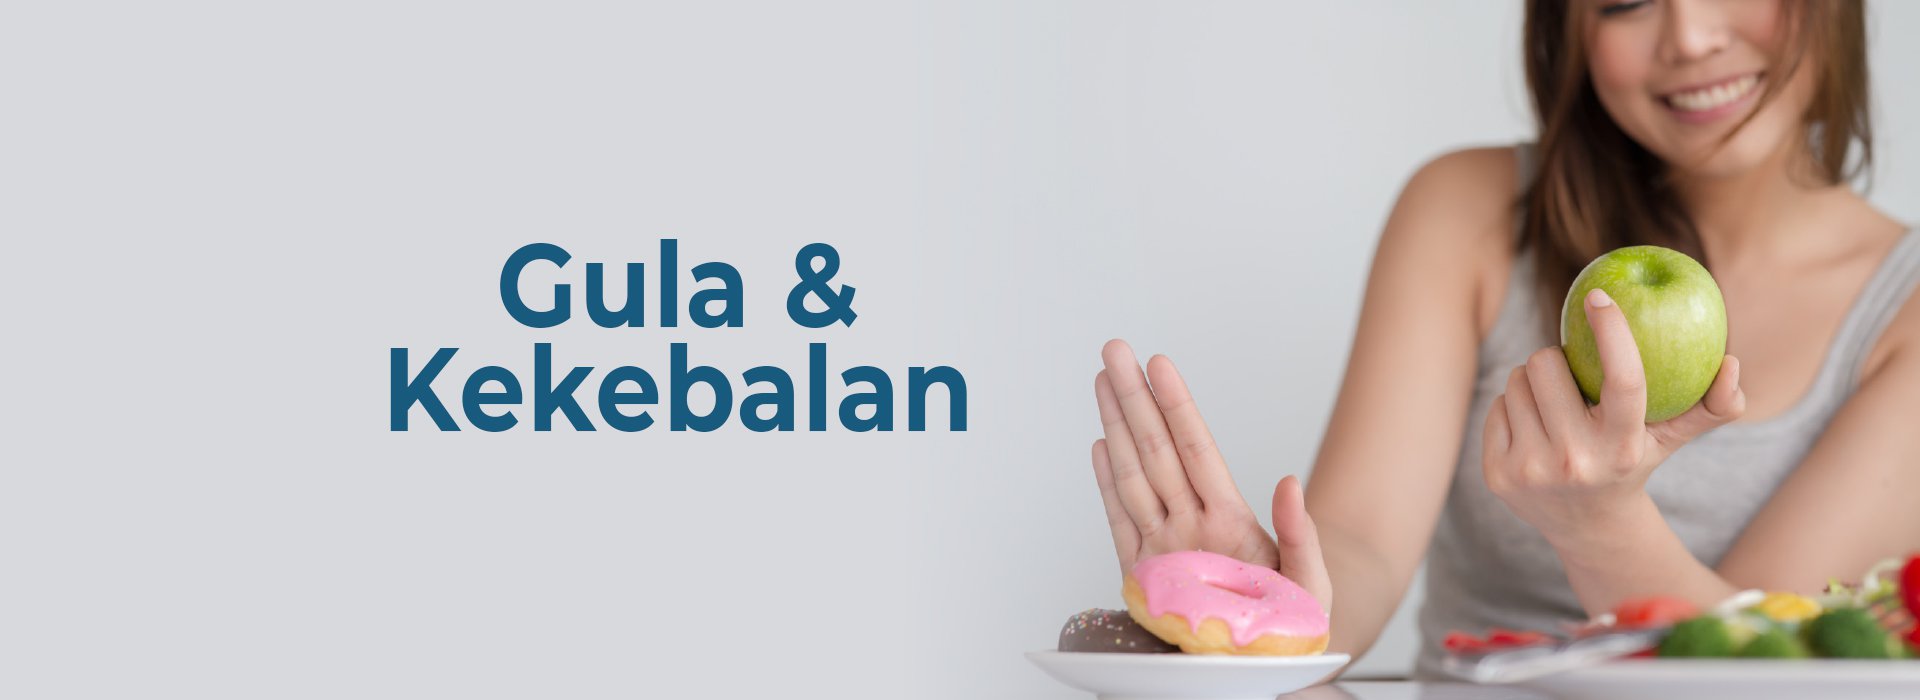 New Image International:Gula & Kekebalan